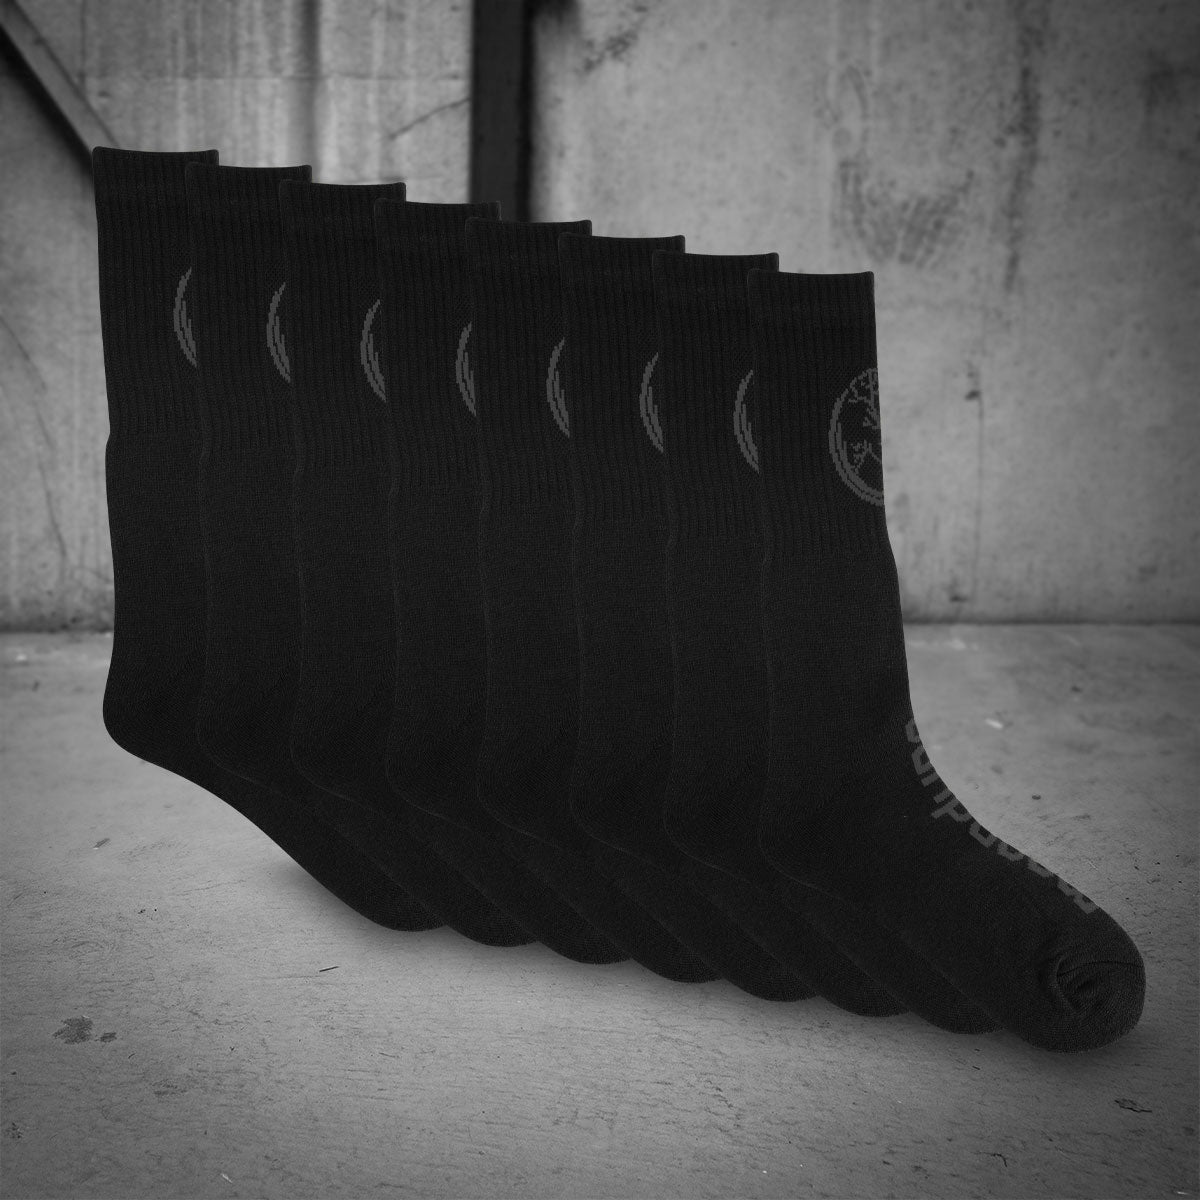 4 Pair Polyester Cotton Socks Black Size 7-12 M00C0712-4BK by Moondyne